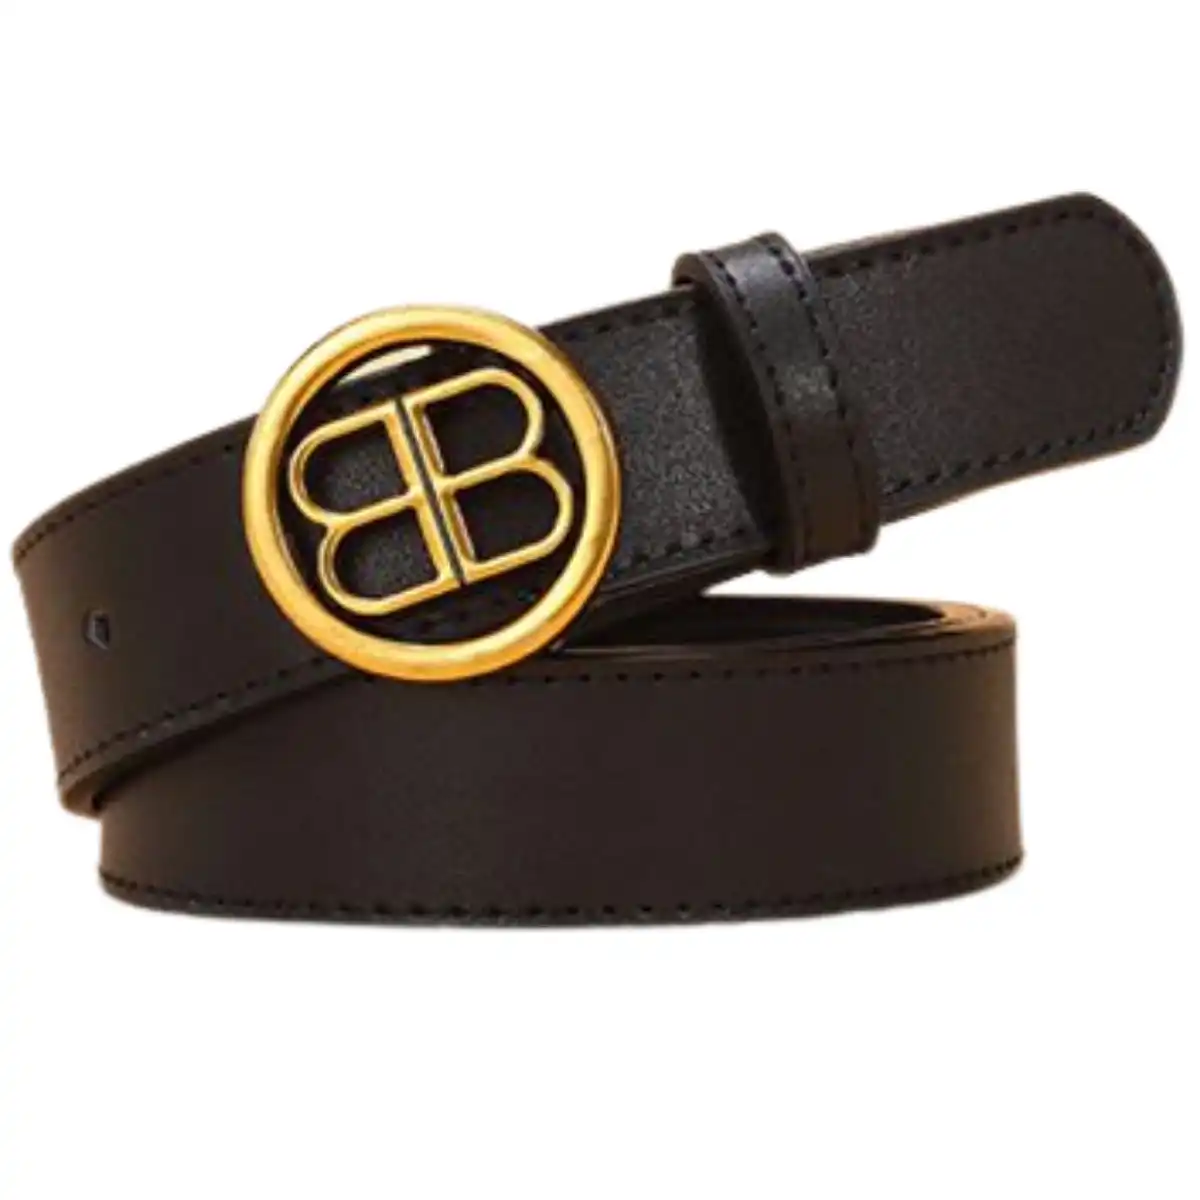 Balenciaga circled bb belt dupe baginc